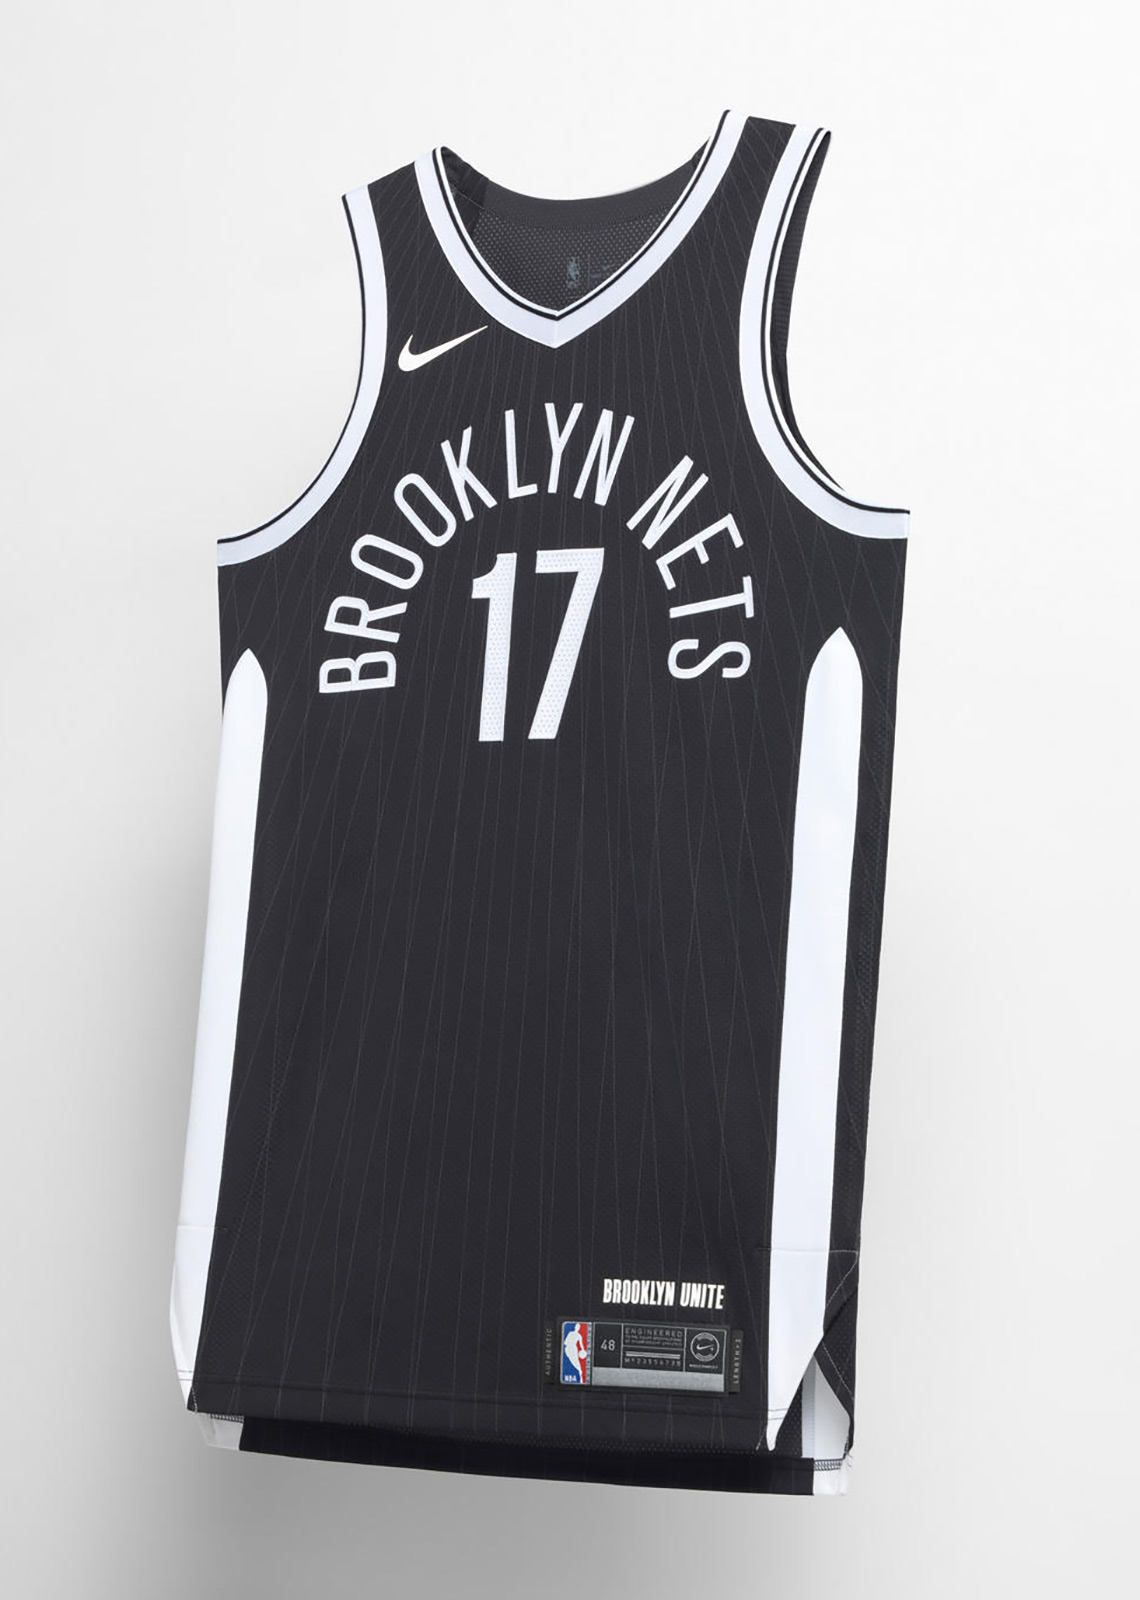 Nba City Edition Uniforms Brooklyn Nets